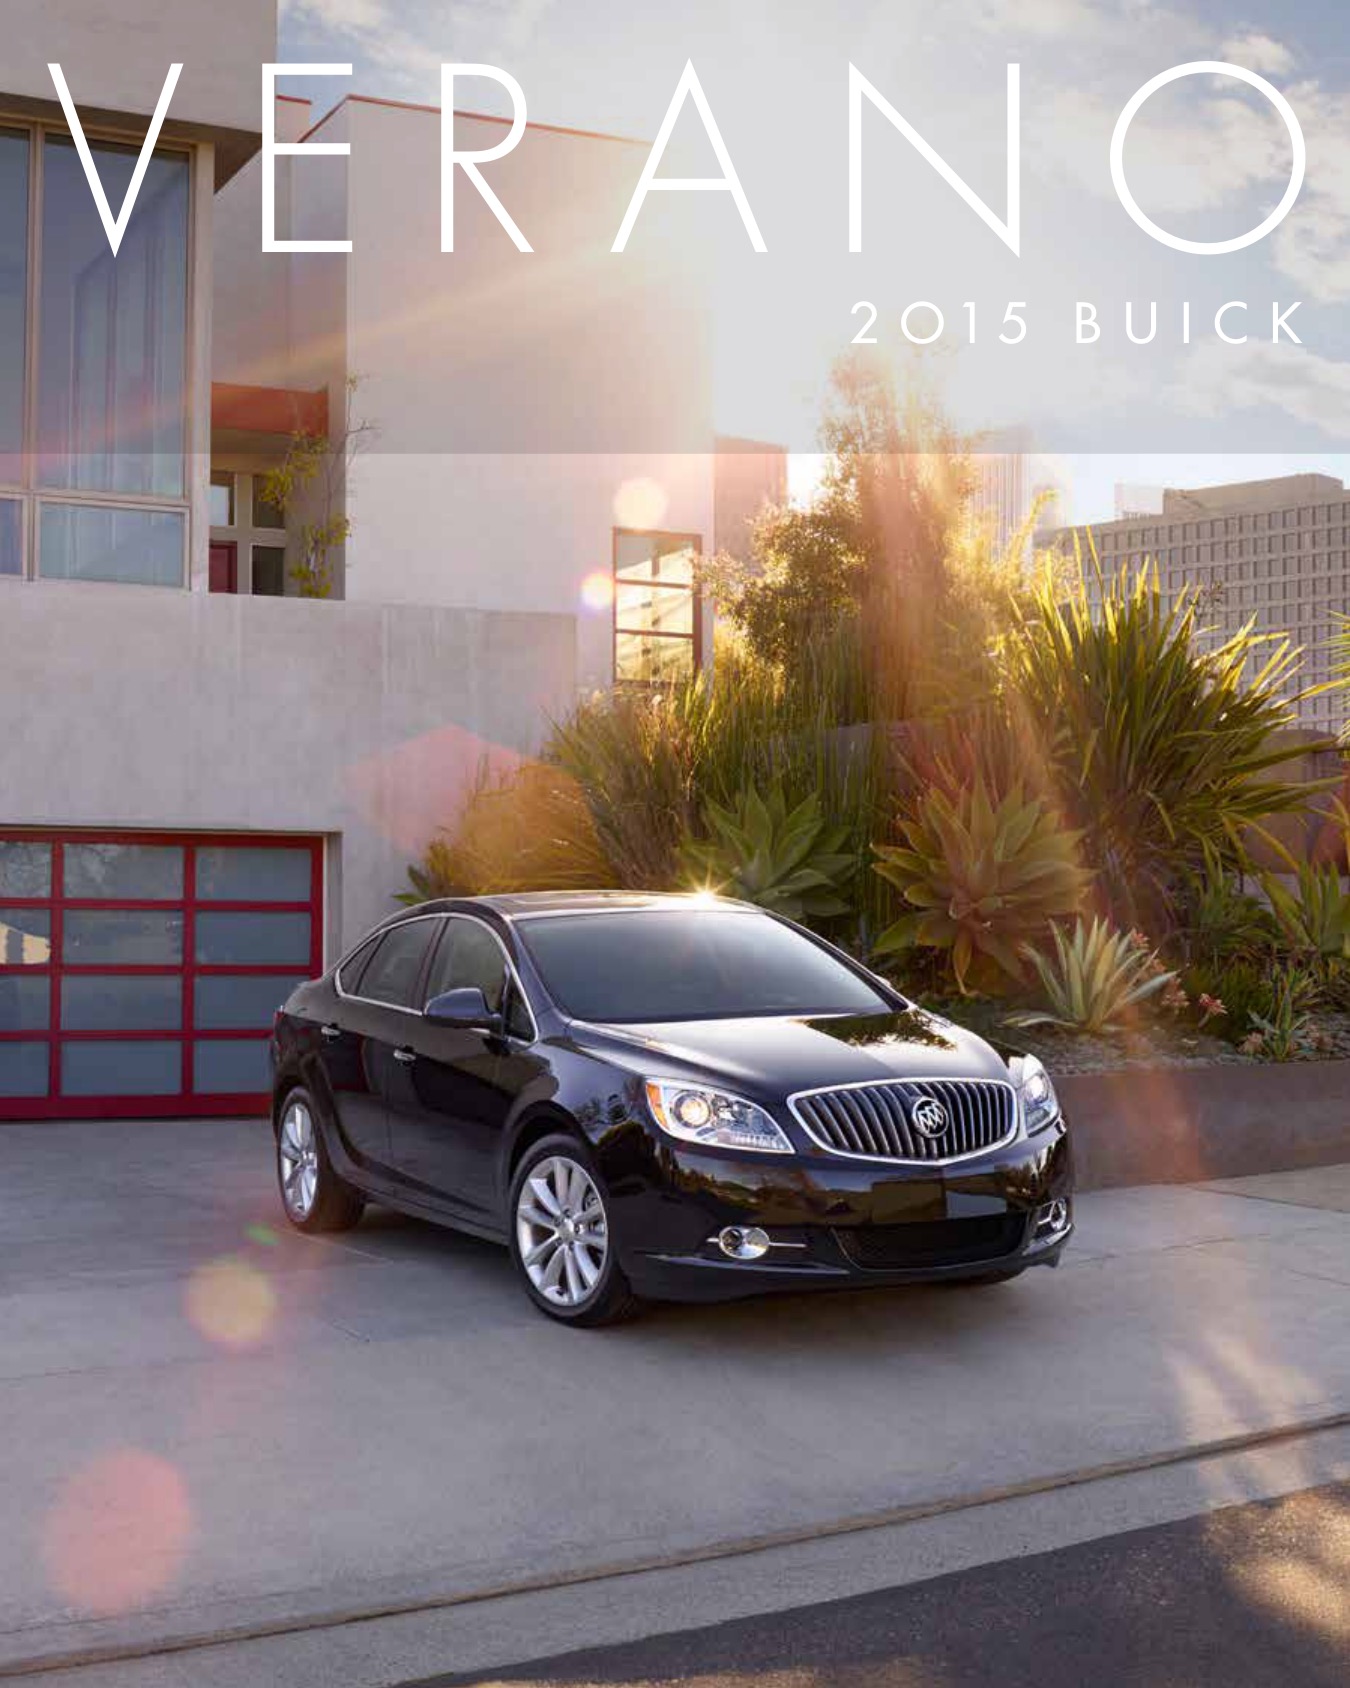 2015 Buick Verano Brochure